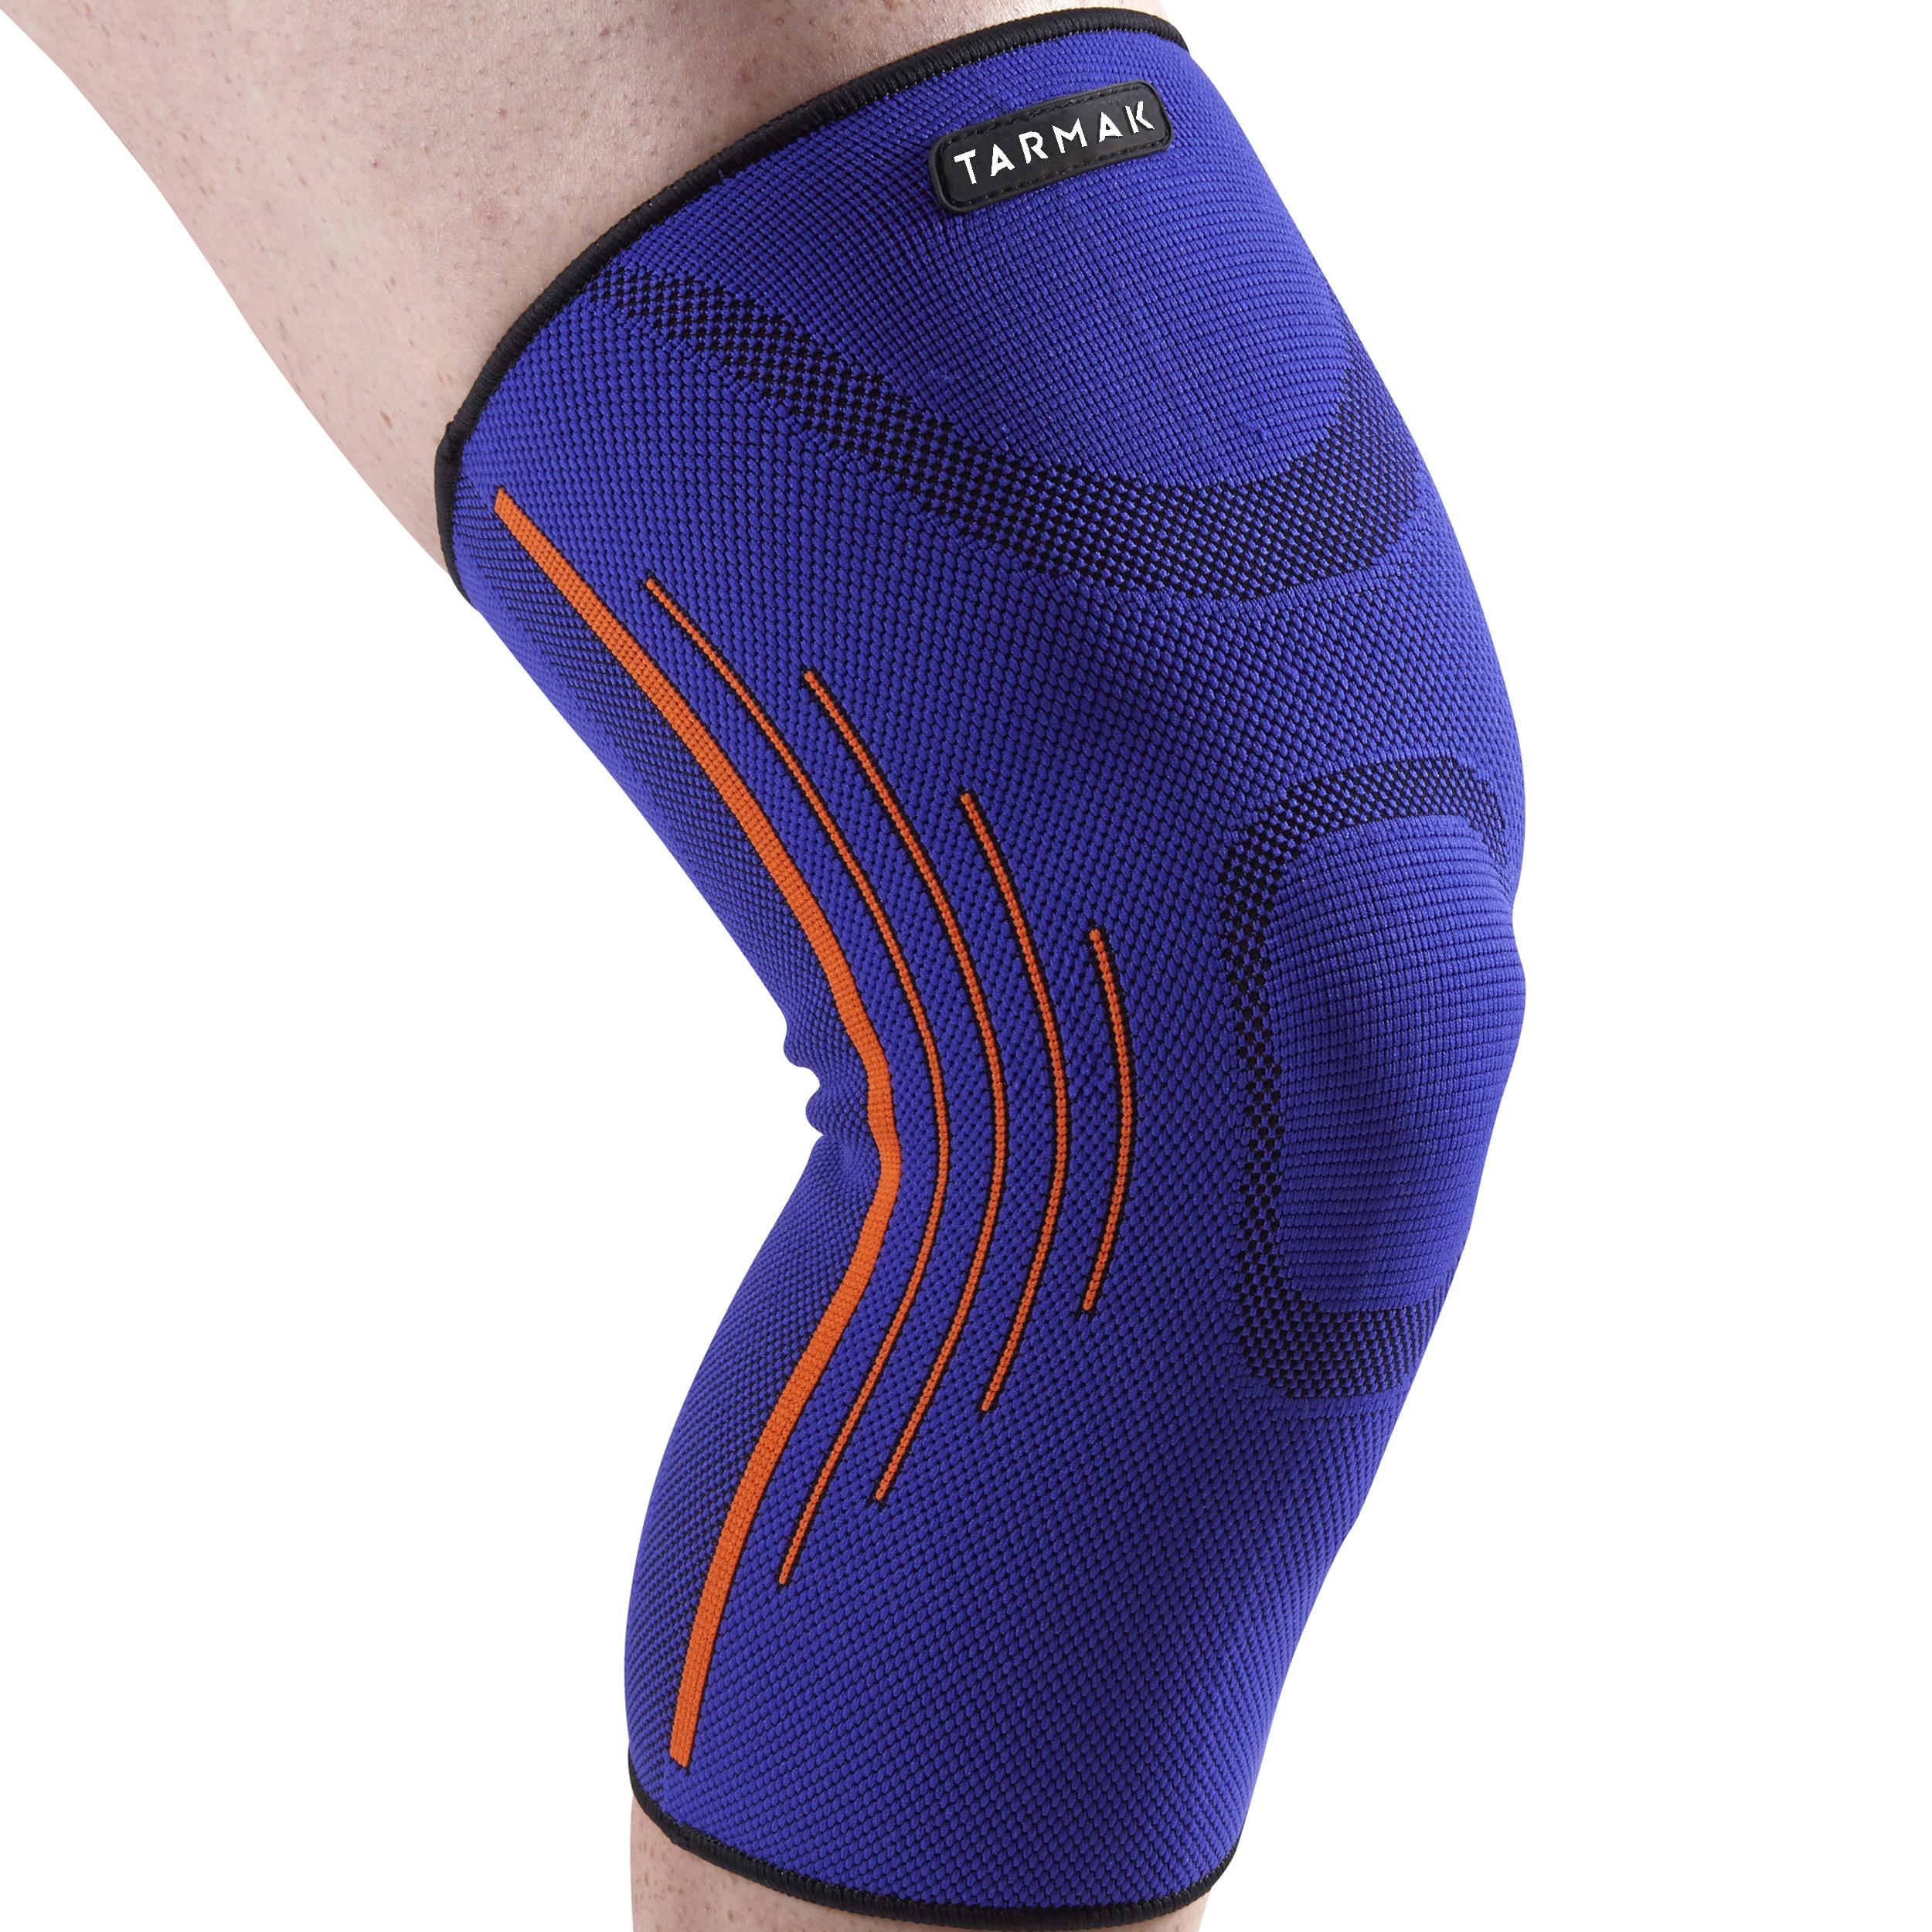 decathlon knee support